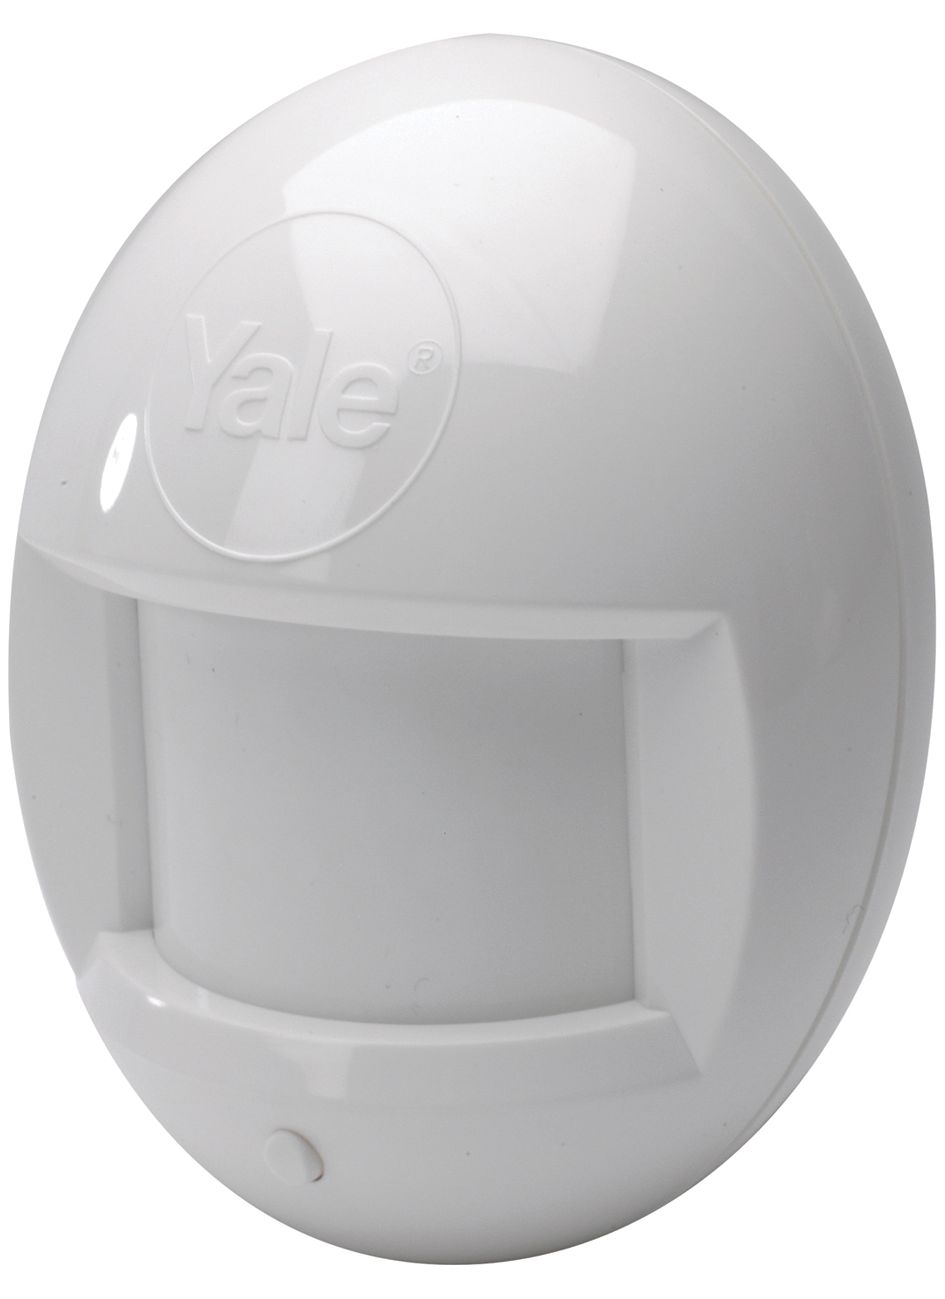 Image of Yale B-HSA6020 Wireless Home Security Alarm PIR Sensor